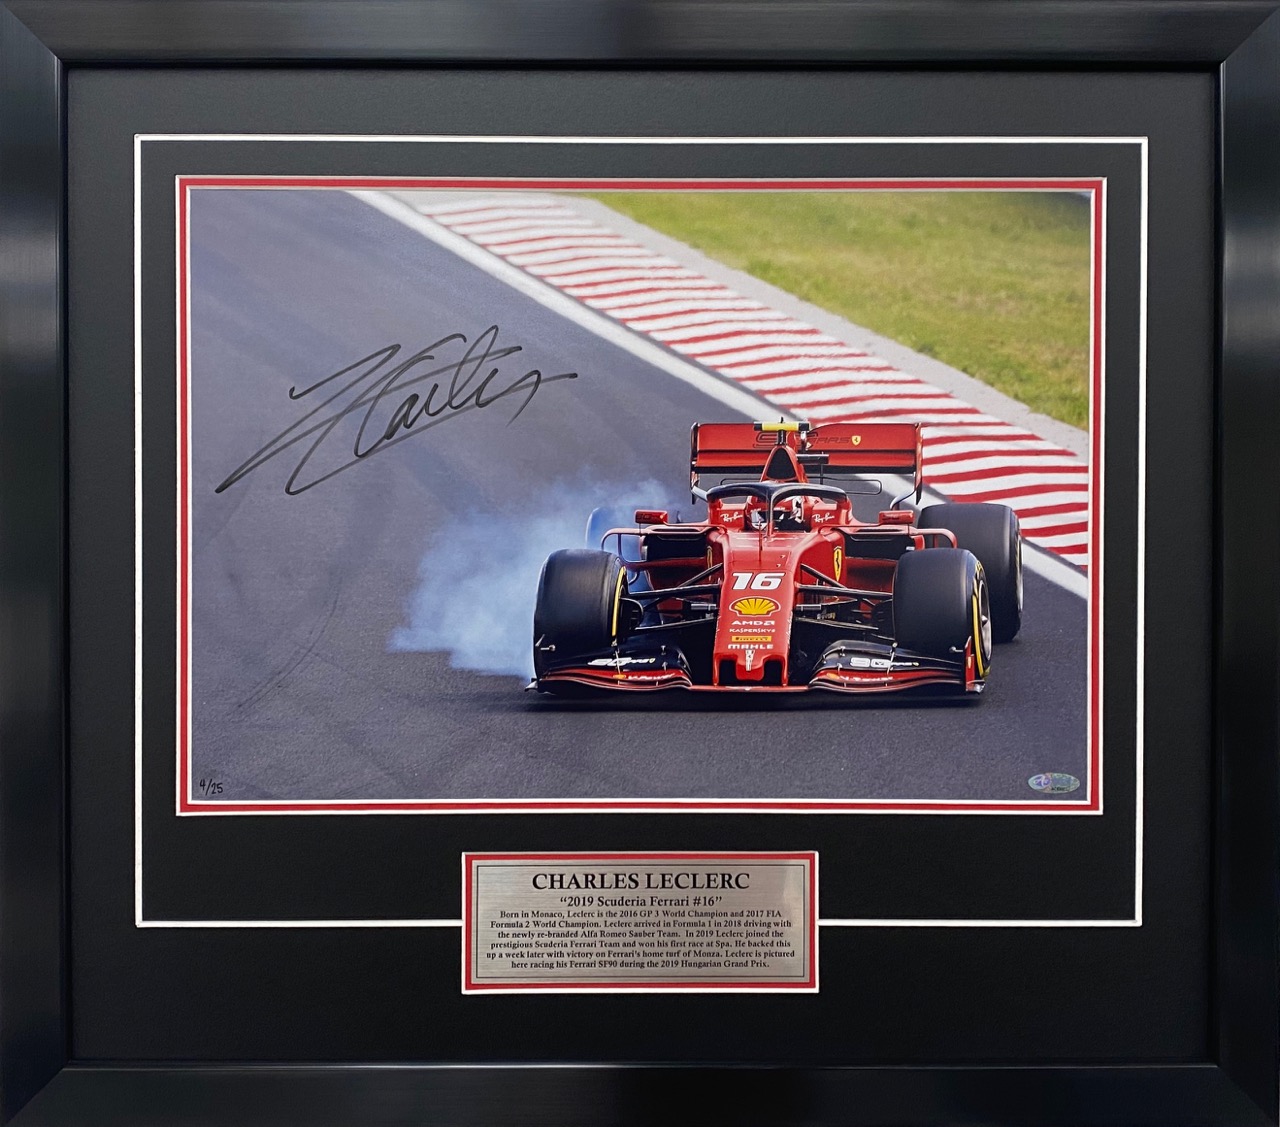 Charles Leclerc 2019 Ferrari signed locked brakes